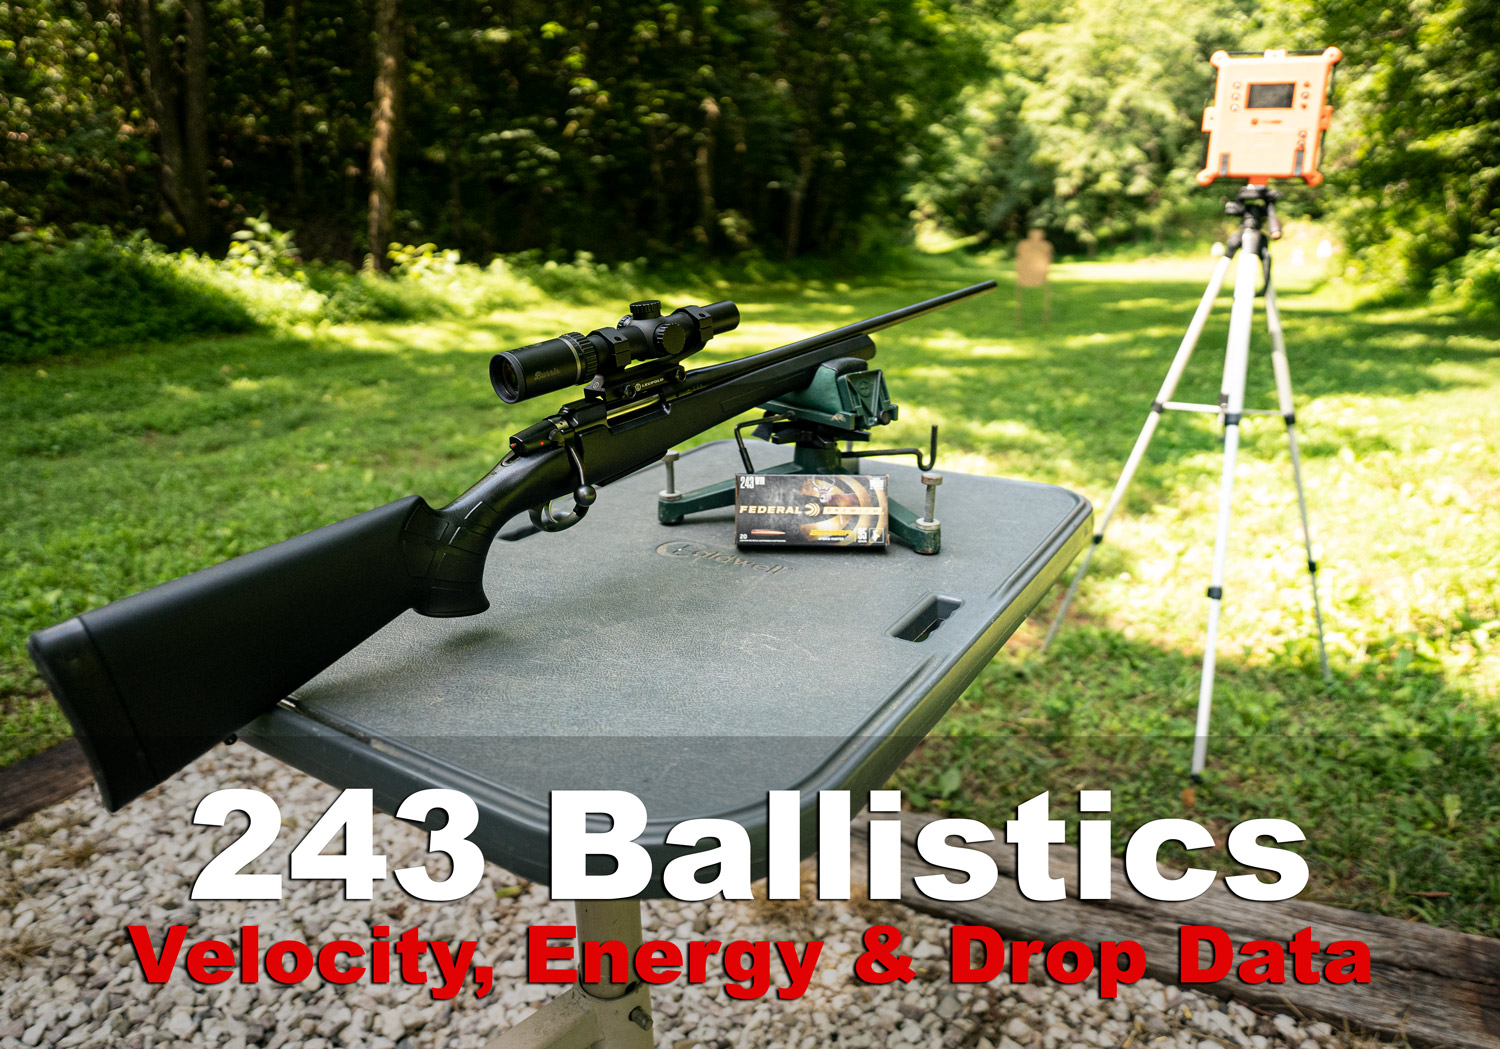 Testing 243 ballistics with a rifle and chronography at a shooting range